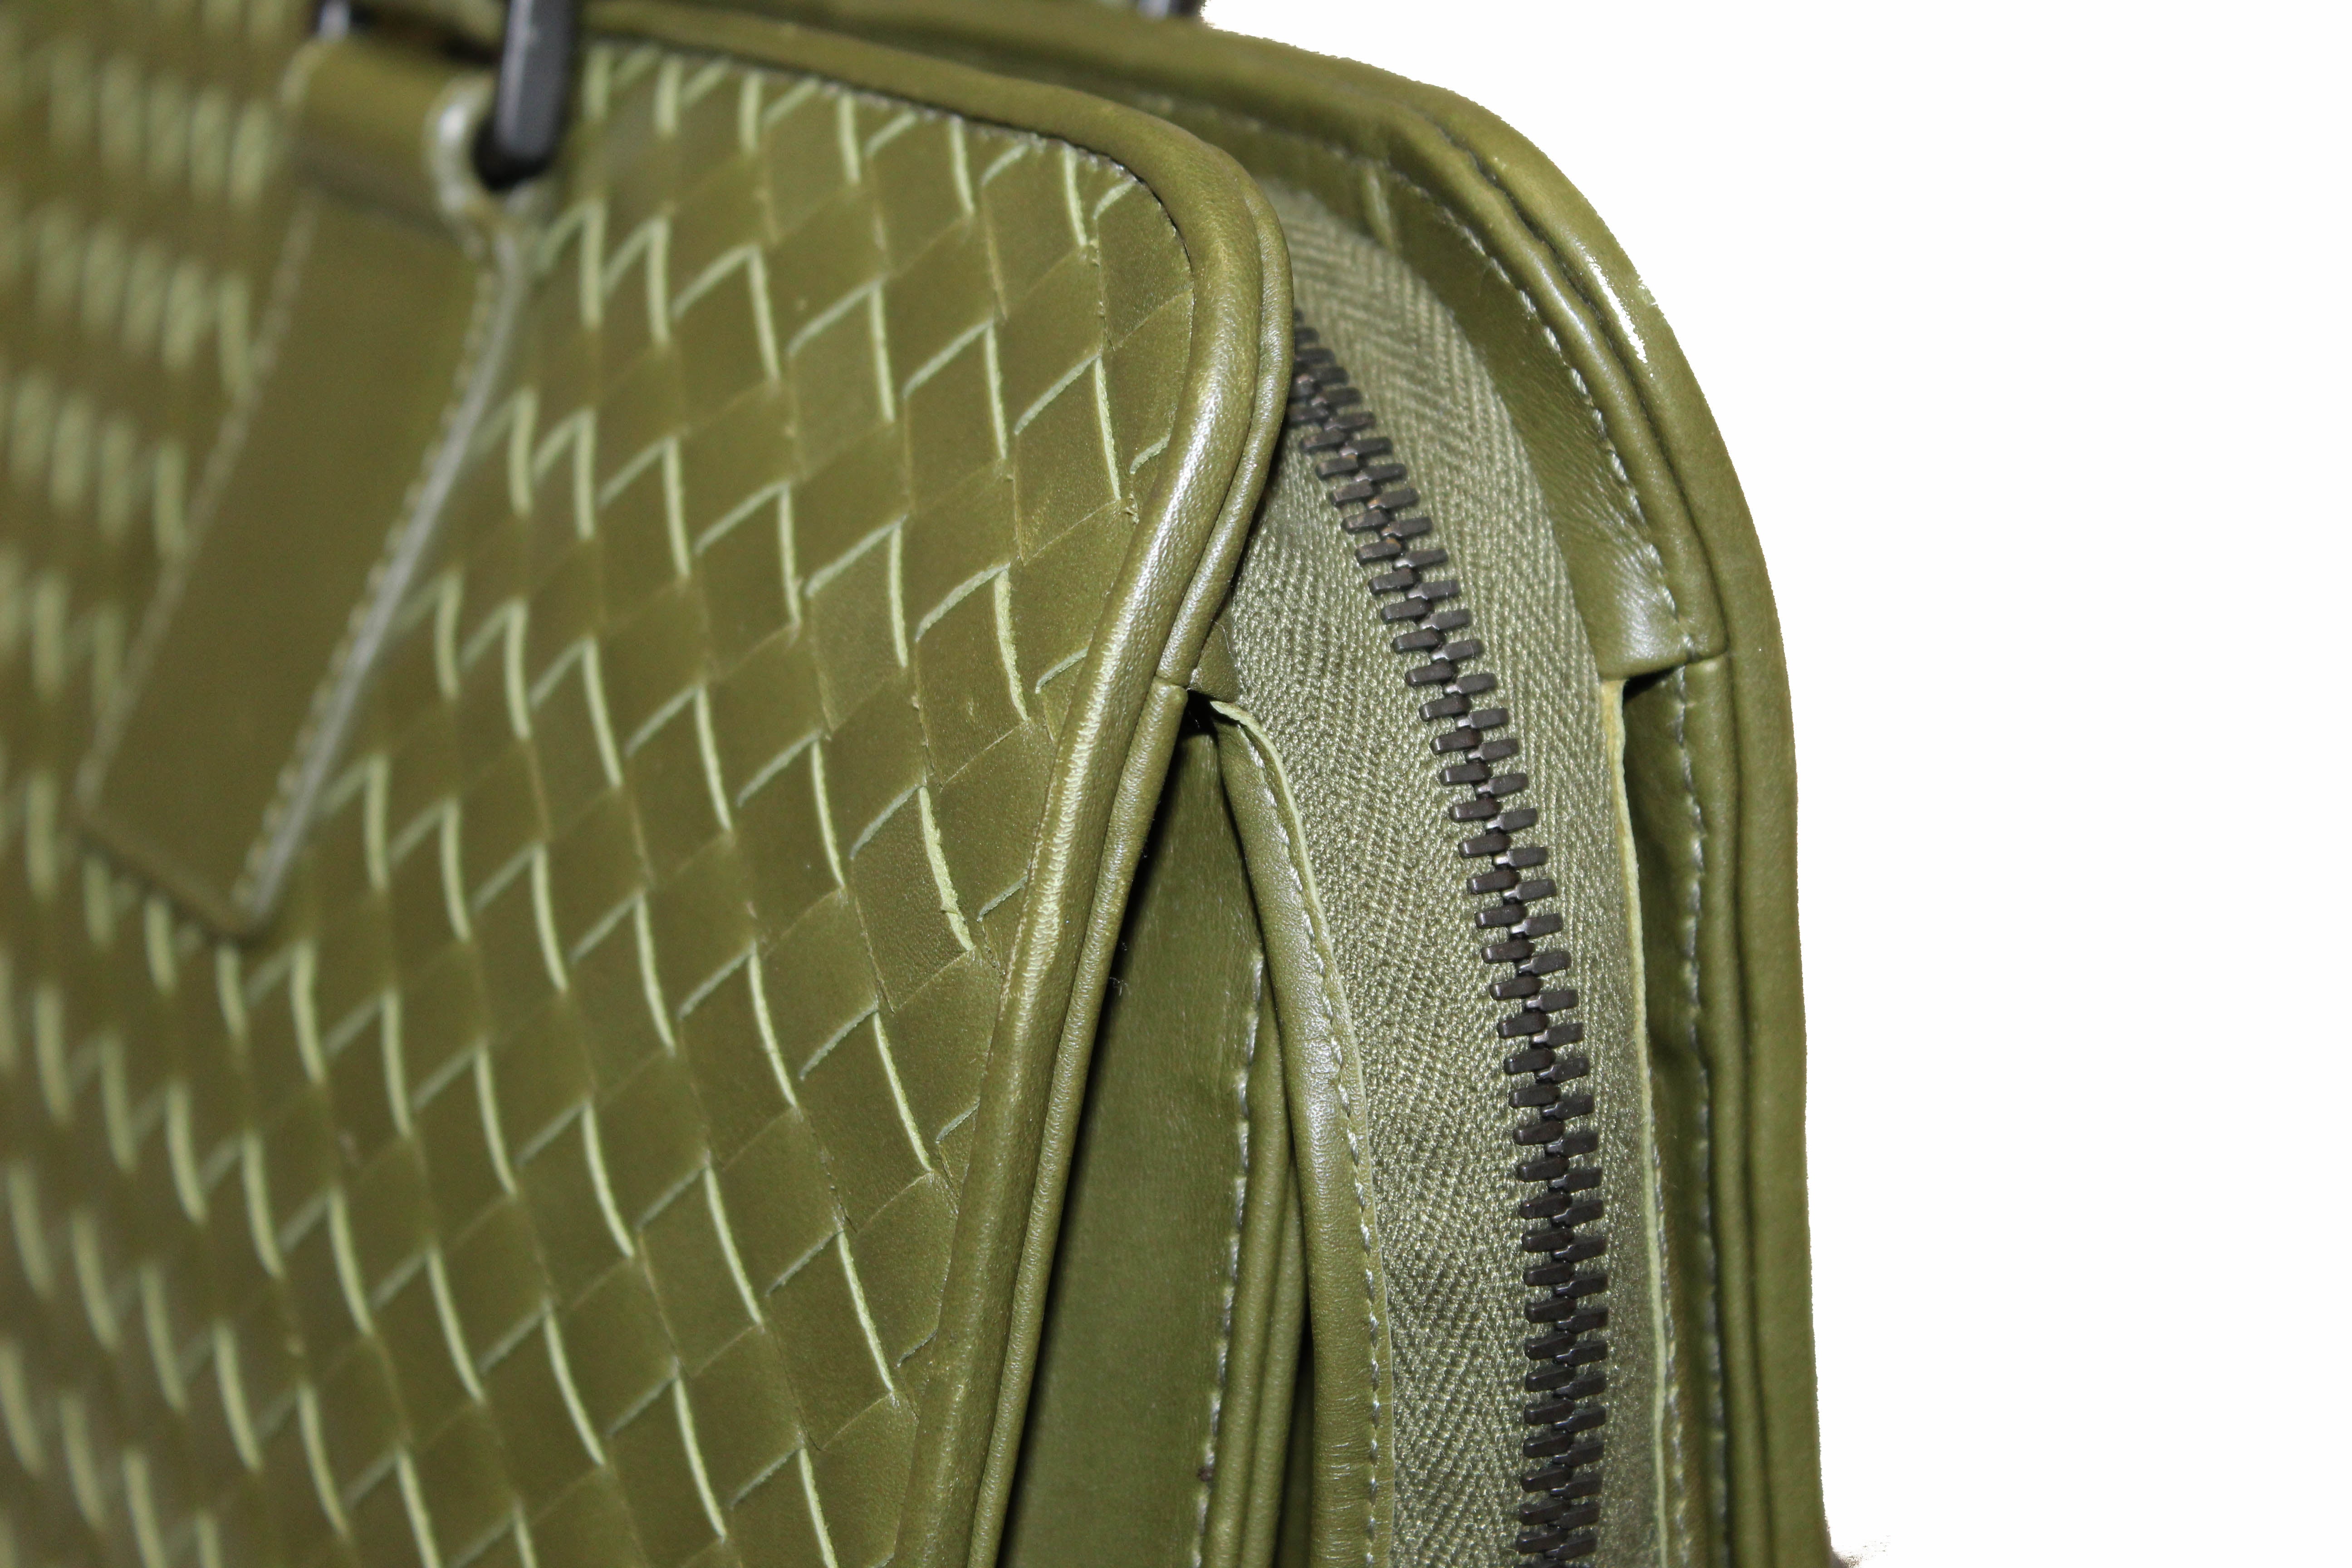 Authentic Bottega Veneta Green Intrecciato Calfskin Leather Briefcase